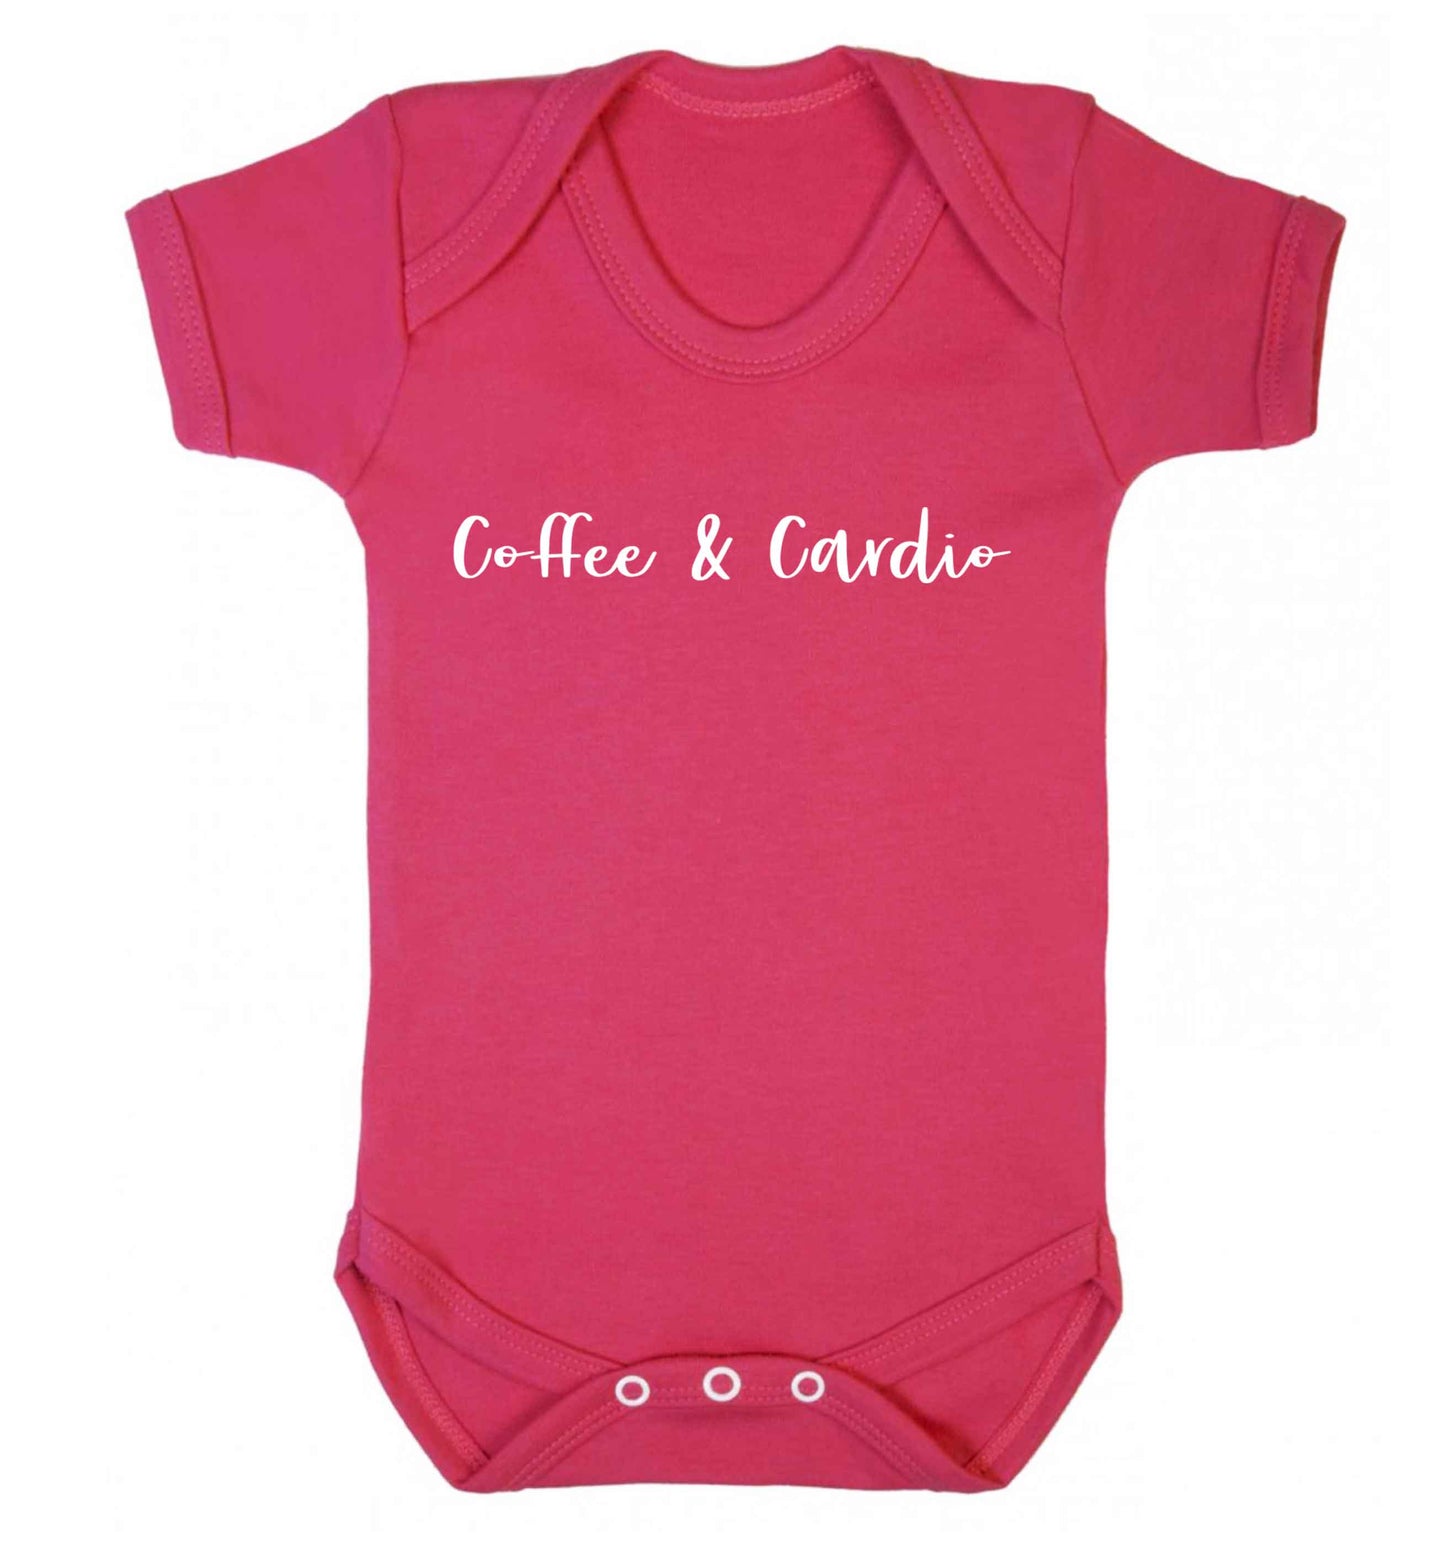 Coffee and cardio Baby Vest dark pink 18-24 months